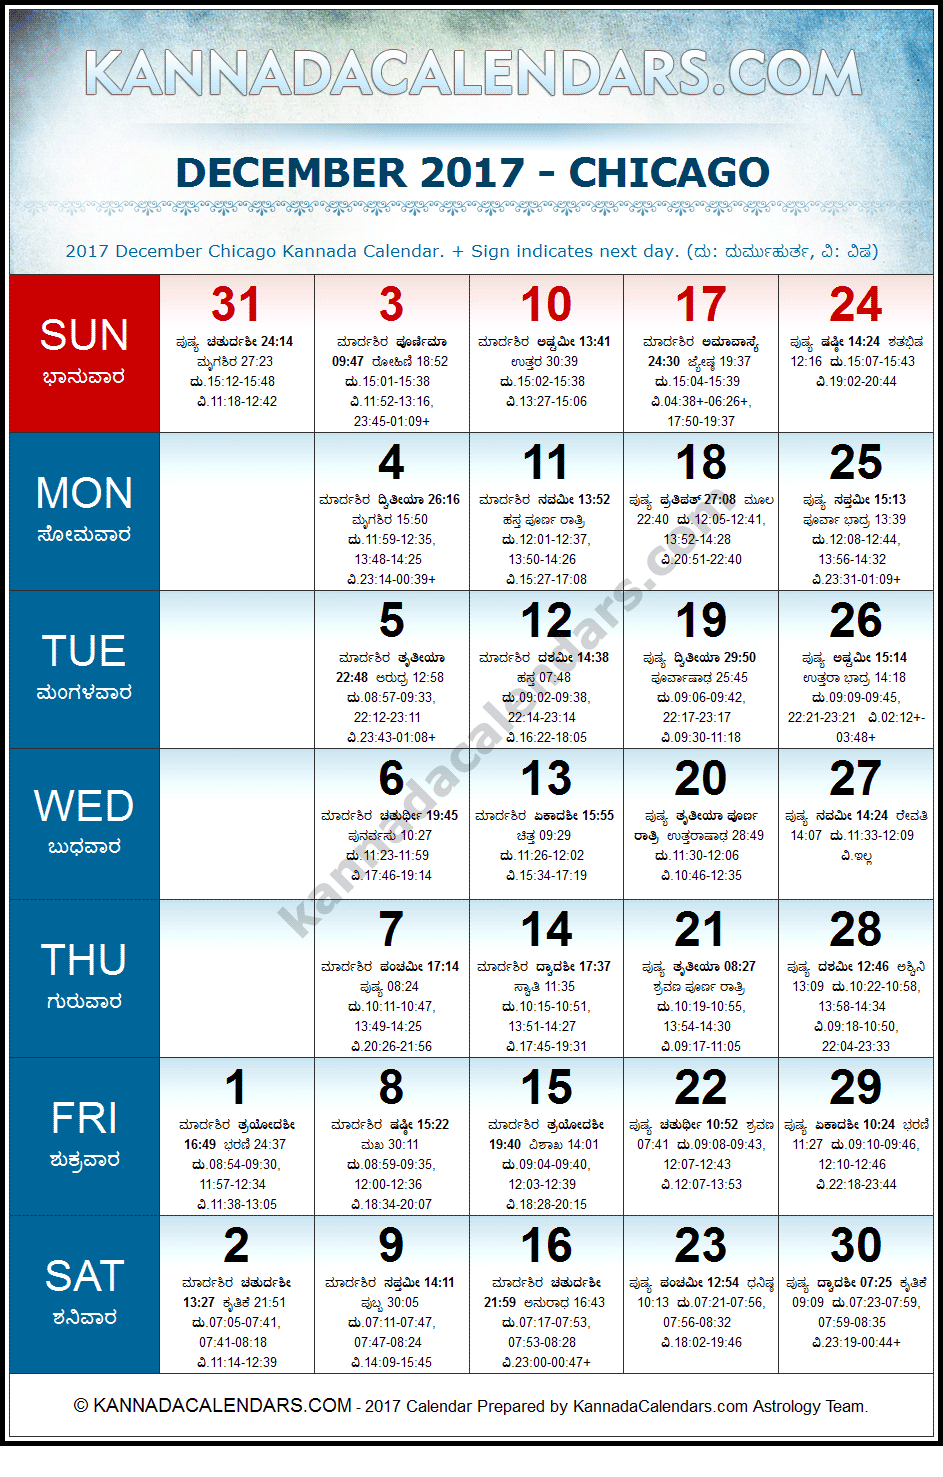 December 2017 Kannada Calendar for Chicago, USA